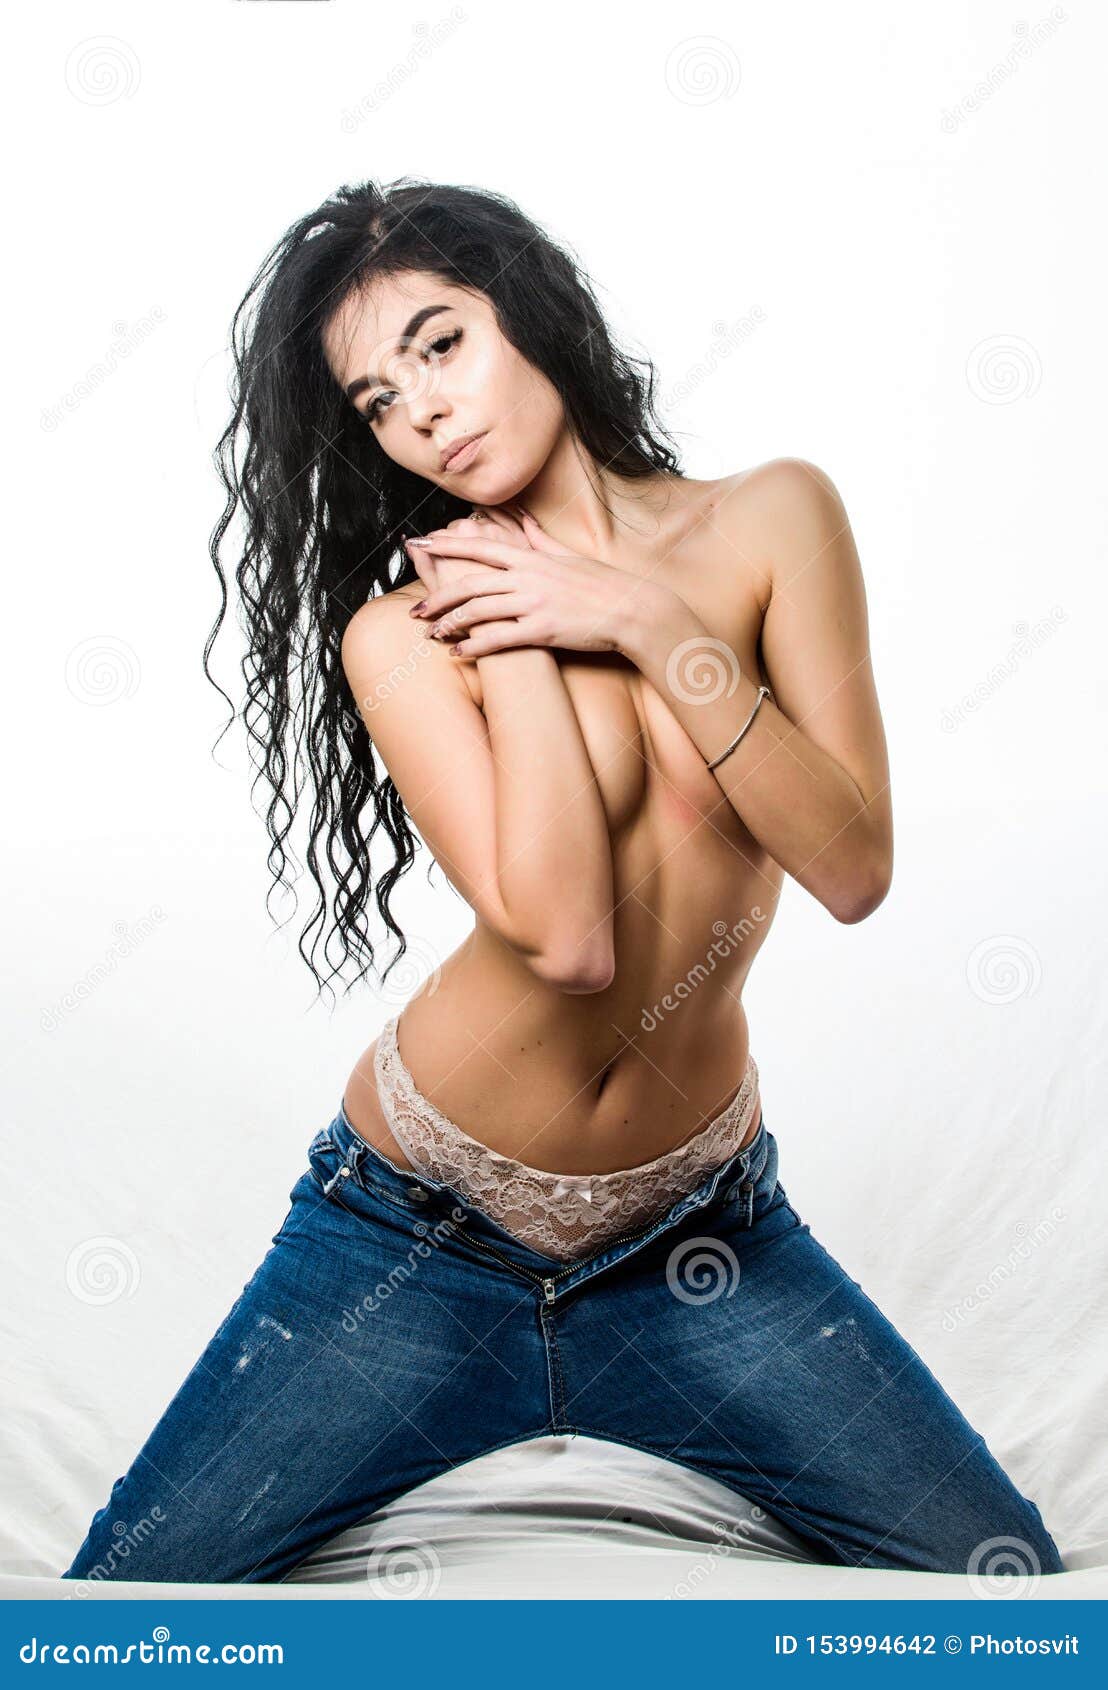 Passionate Striptease. Passionate Full Sexual Desire photo photo